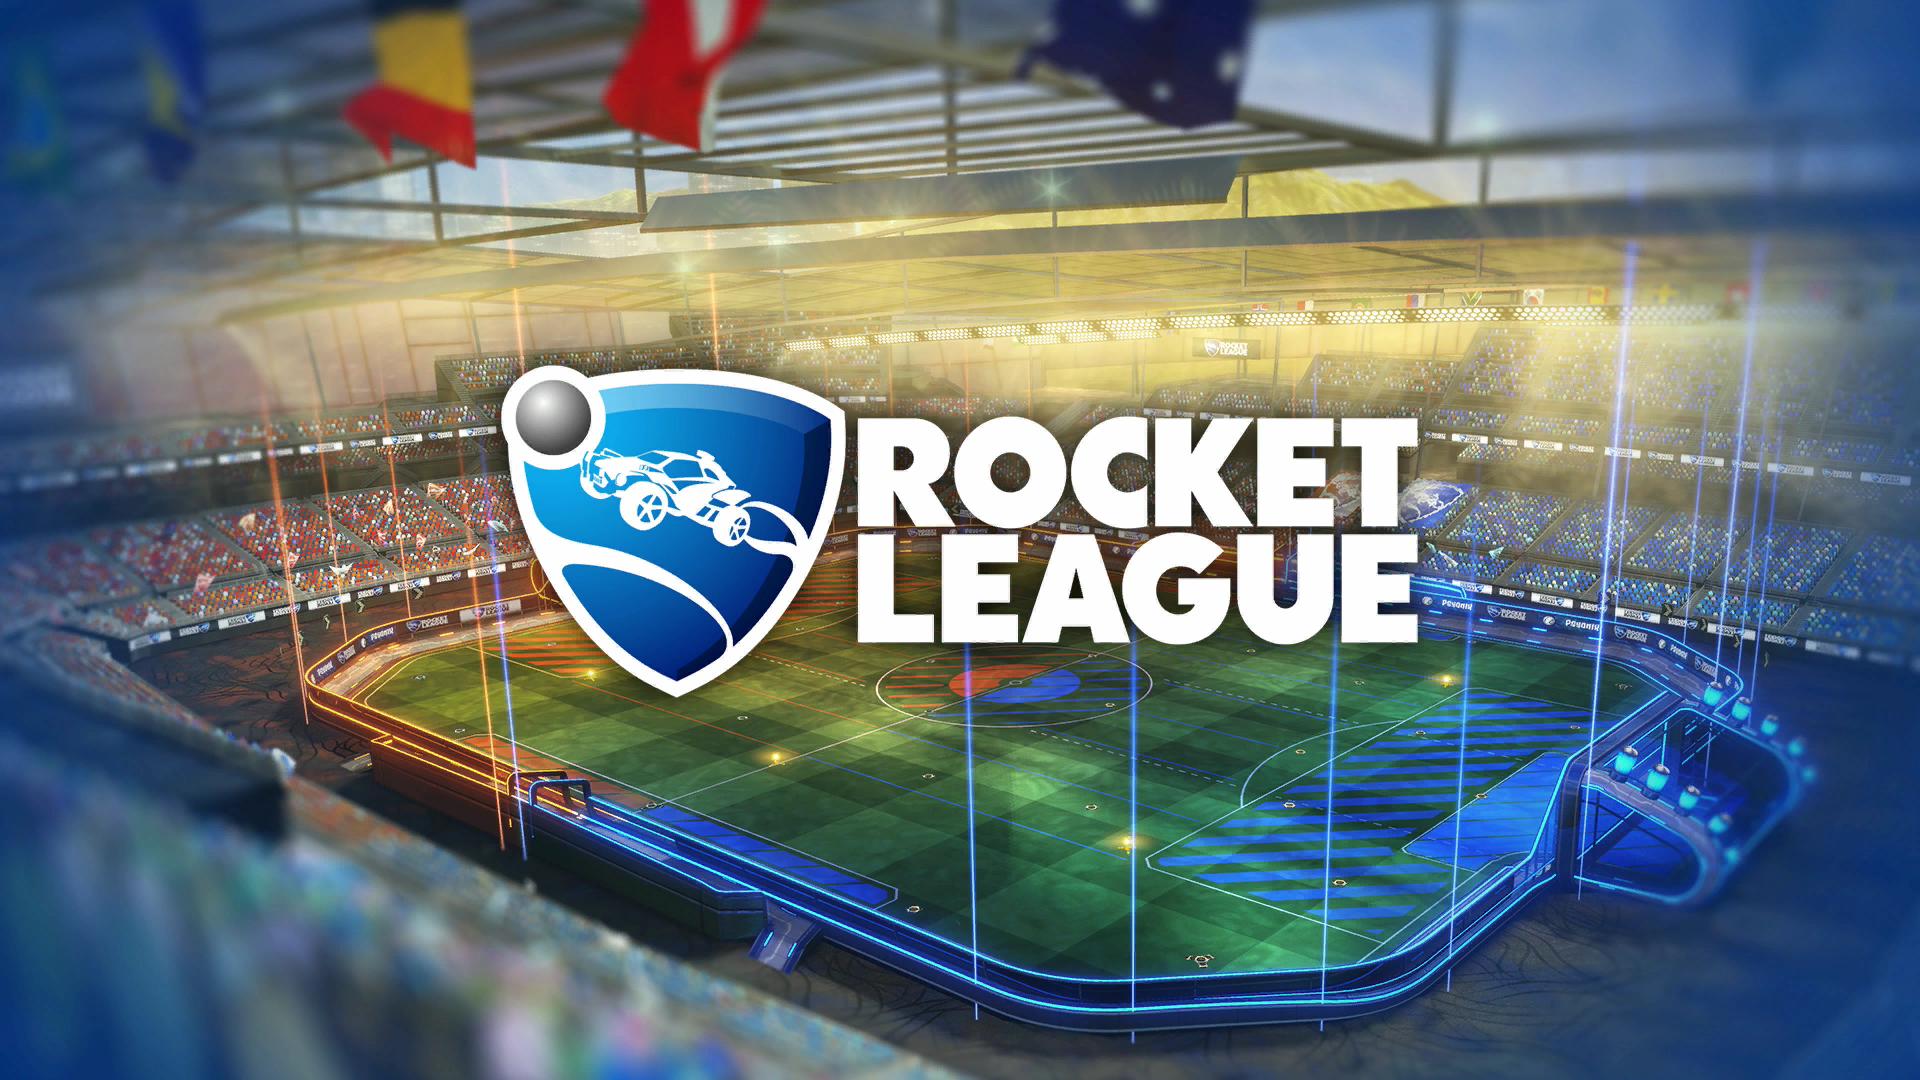 More information about "Rocket League Review"